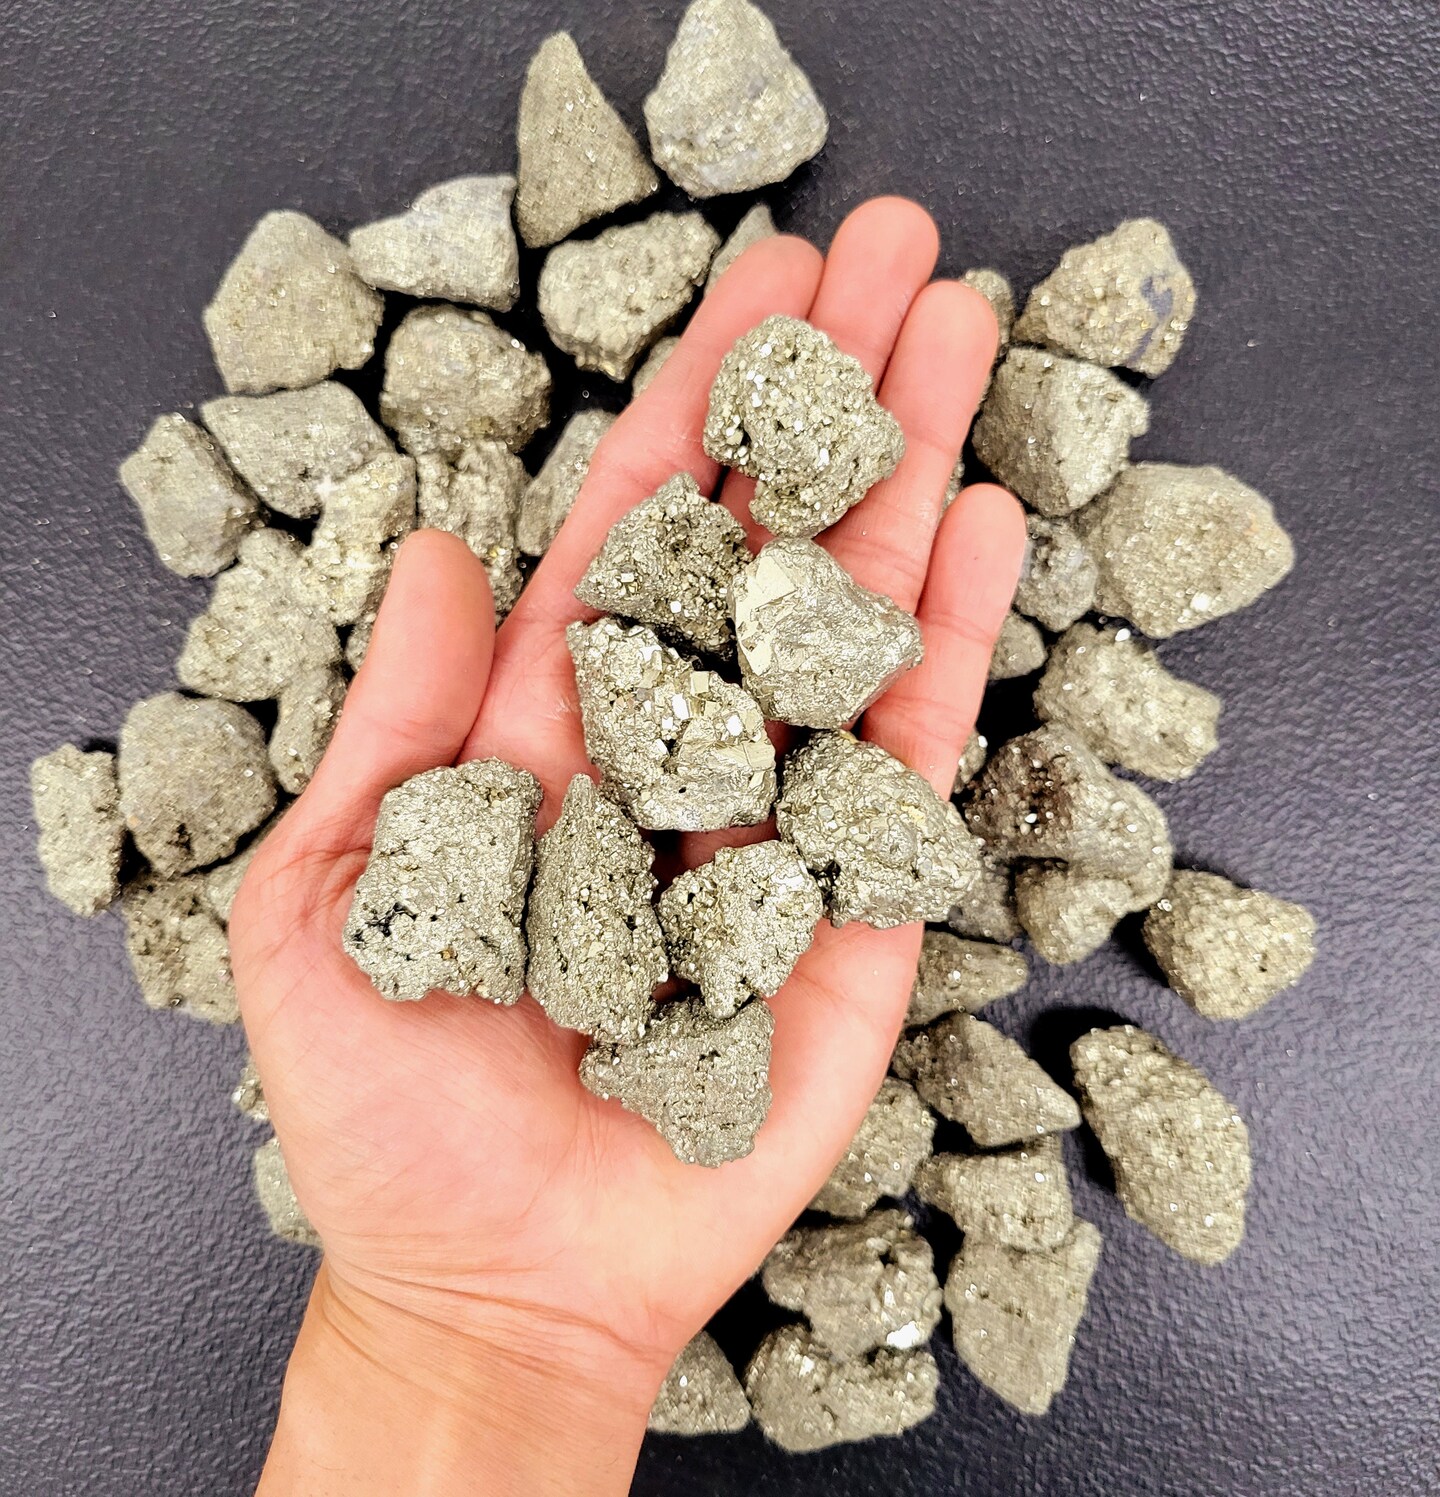 Pyrite Crystals Medium Size - Rough Stones Bulk